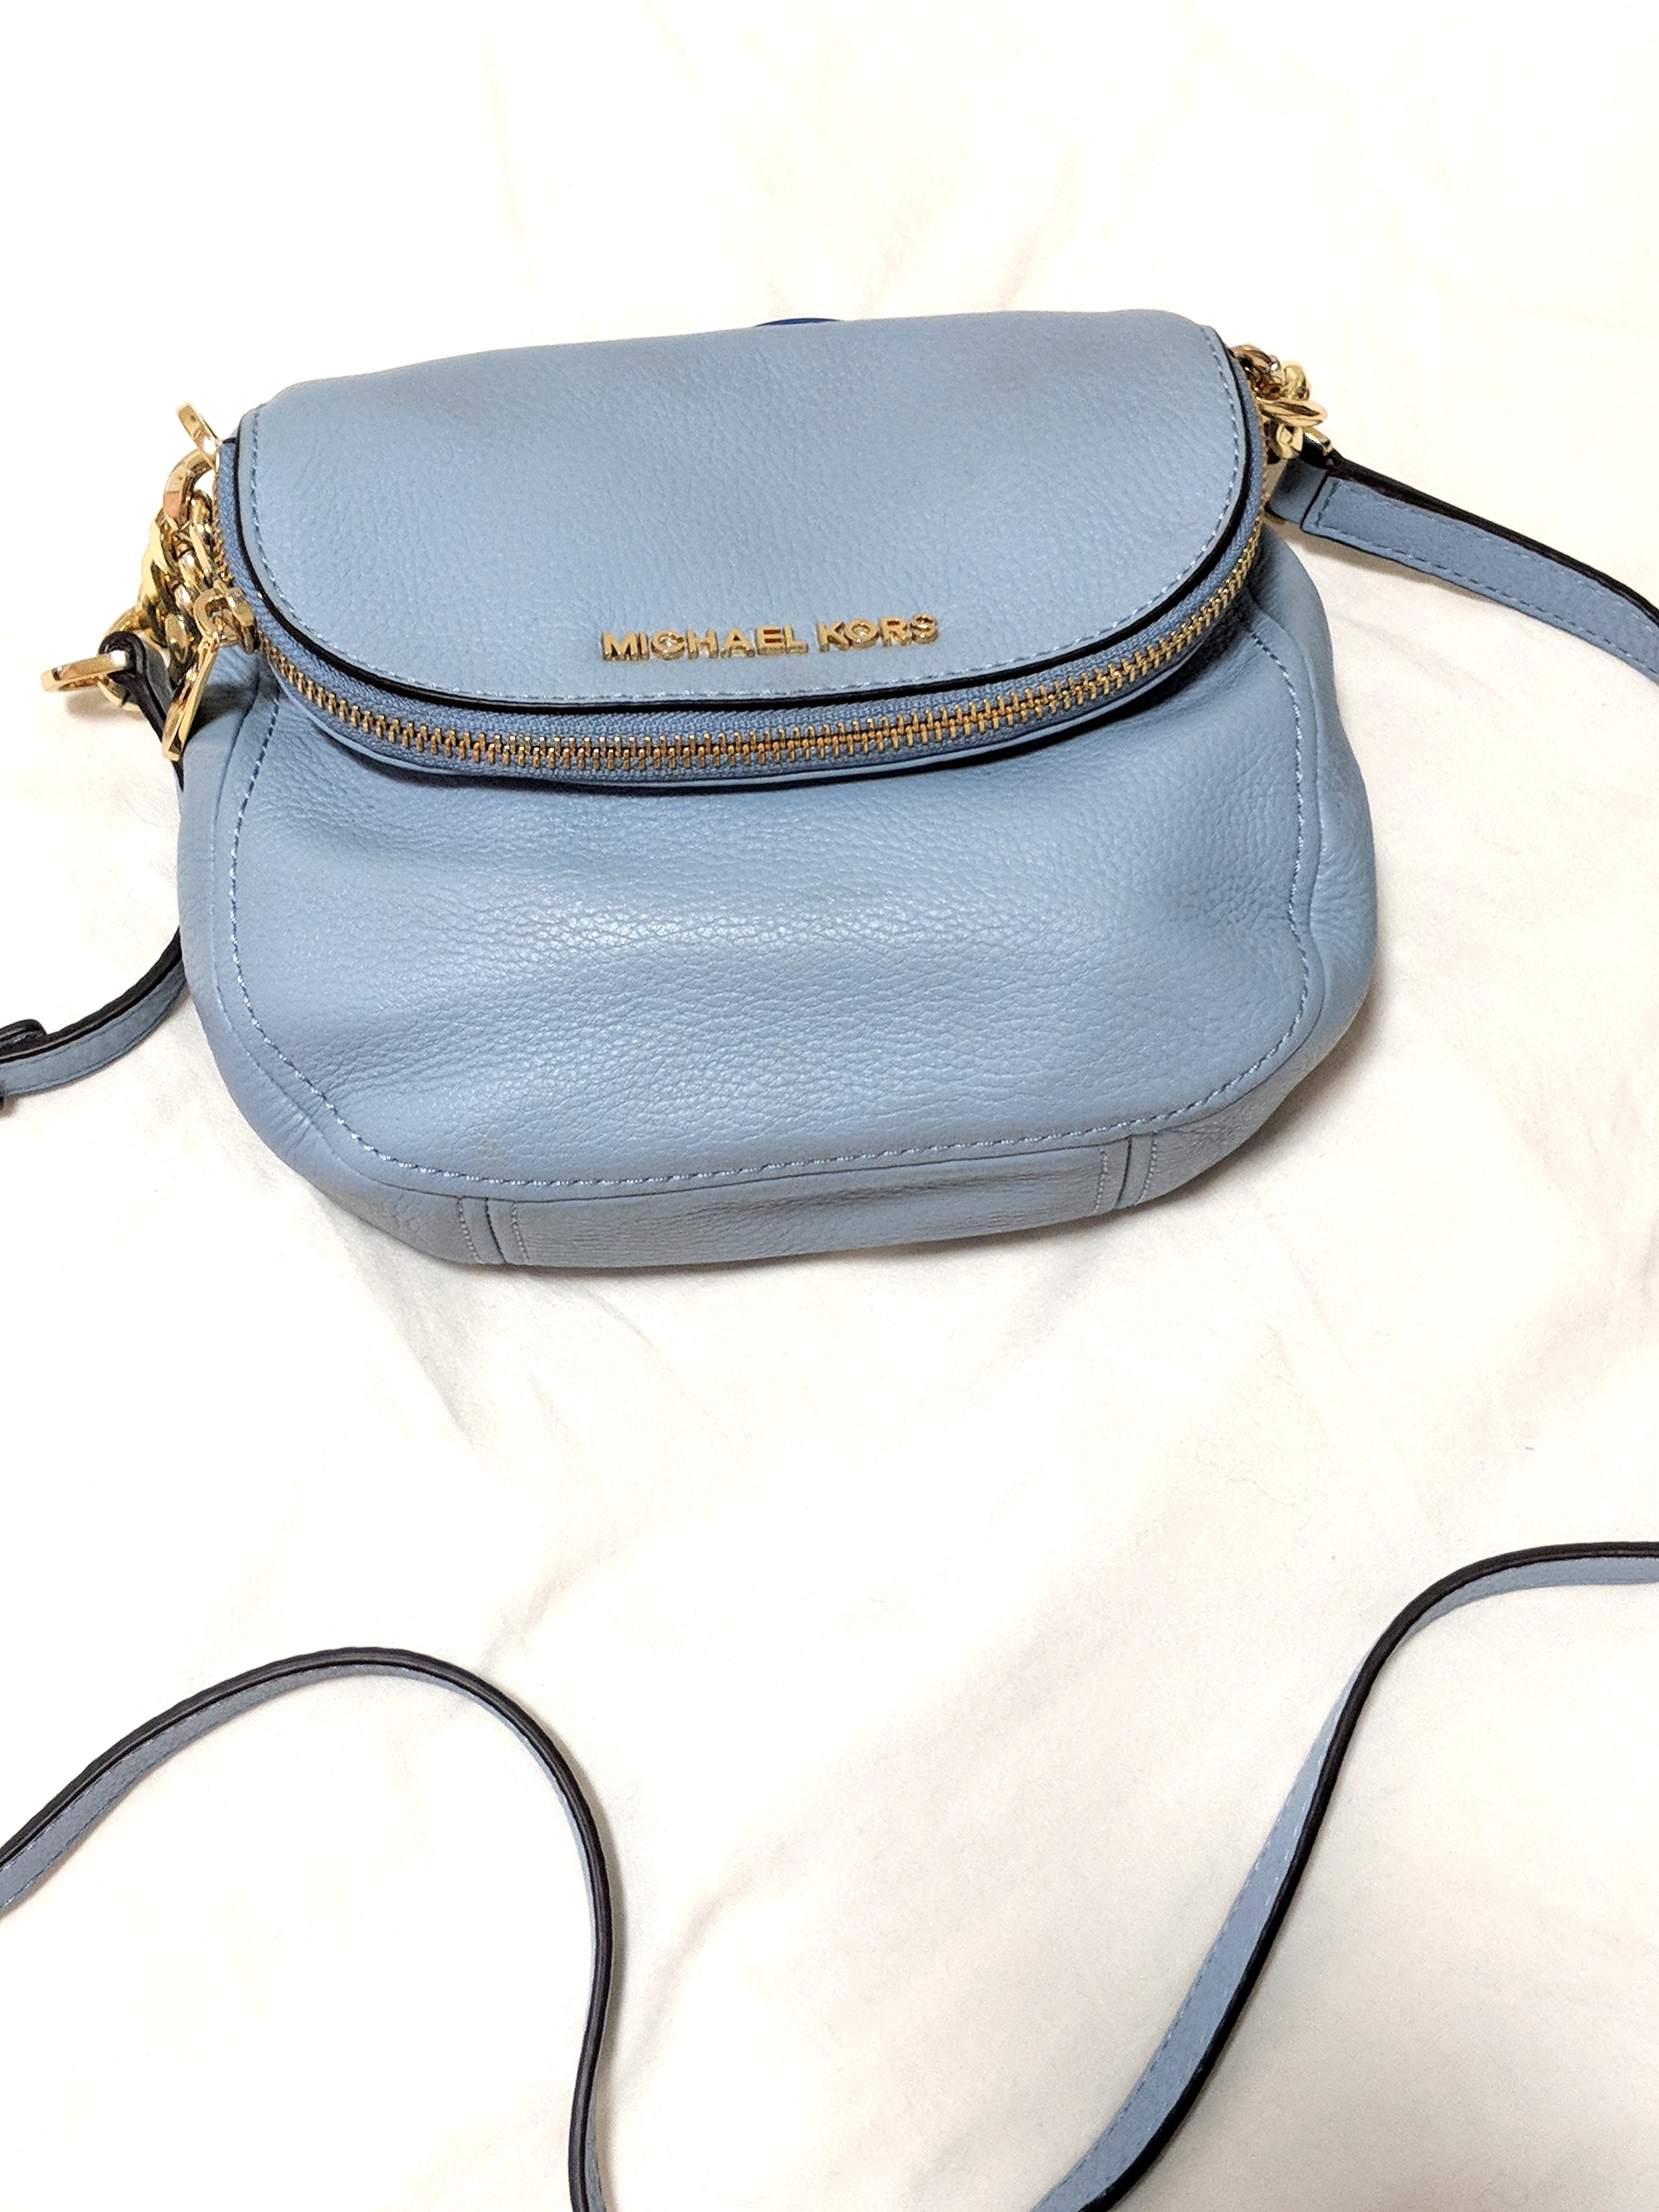 michael kors baby blue handbag